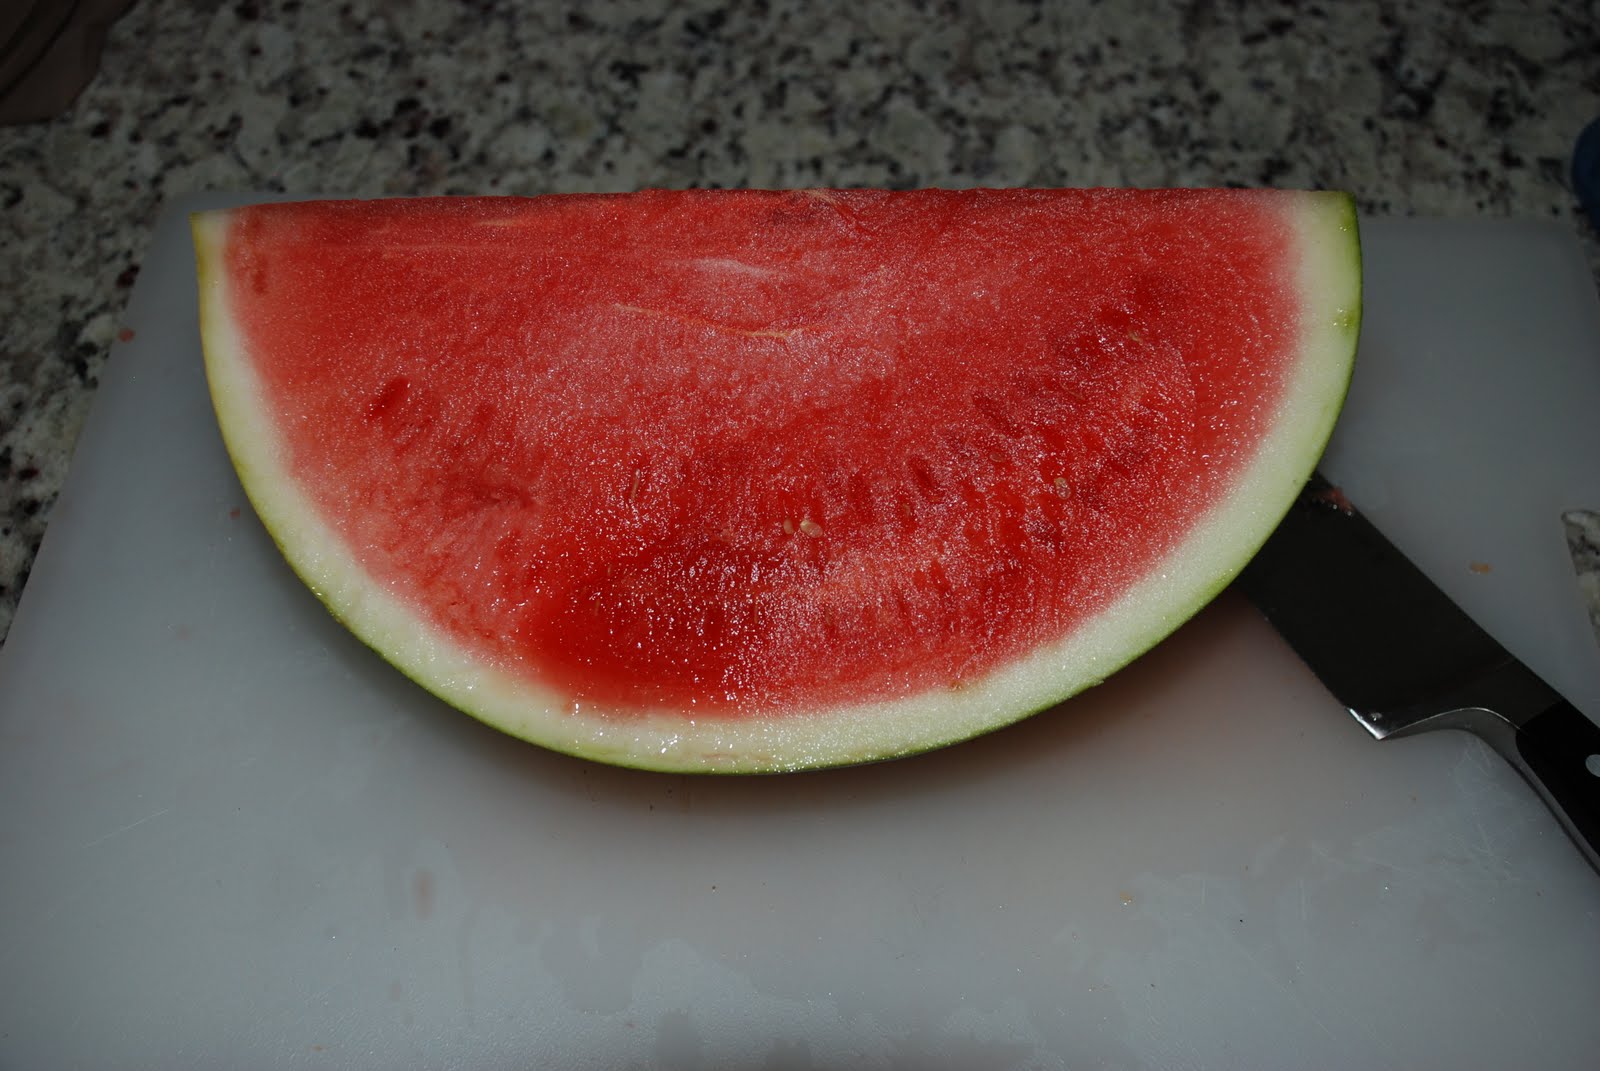 Watermelon Sliced In Half